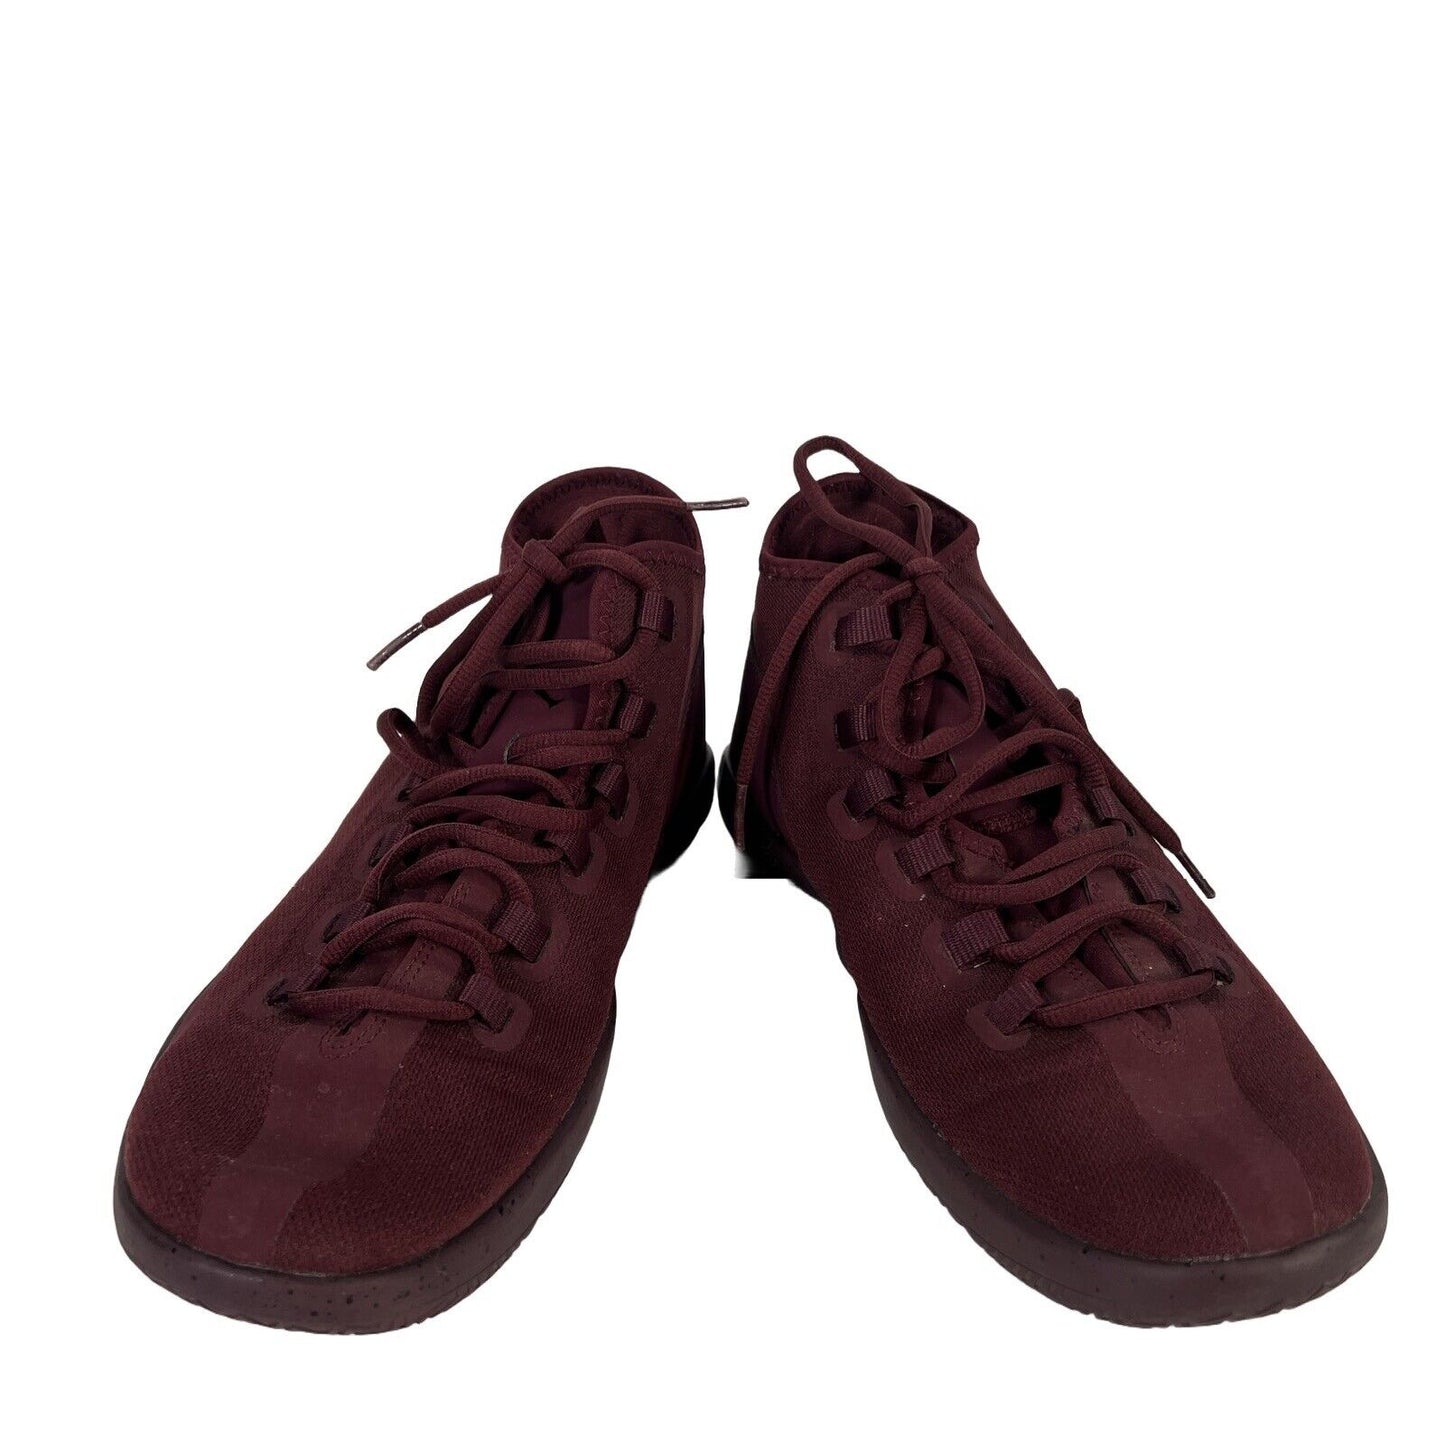 Air Jordan Men's Night Maroon Red Reveal Sneakers Shoes - 9.5